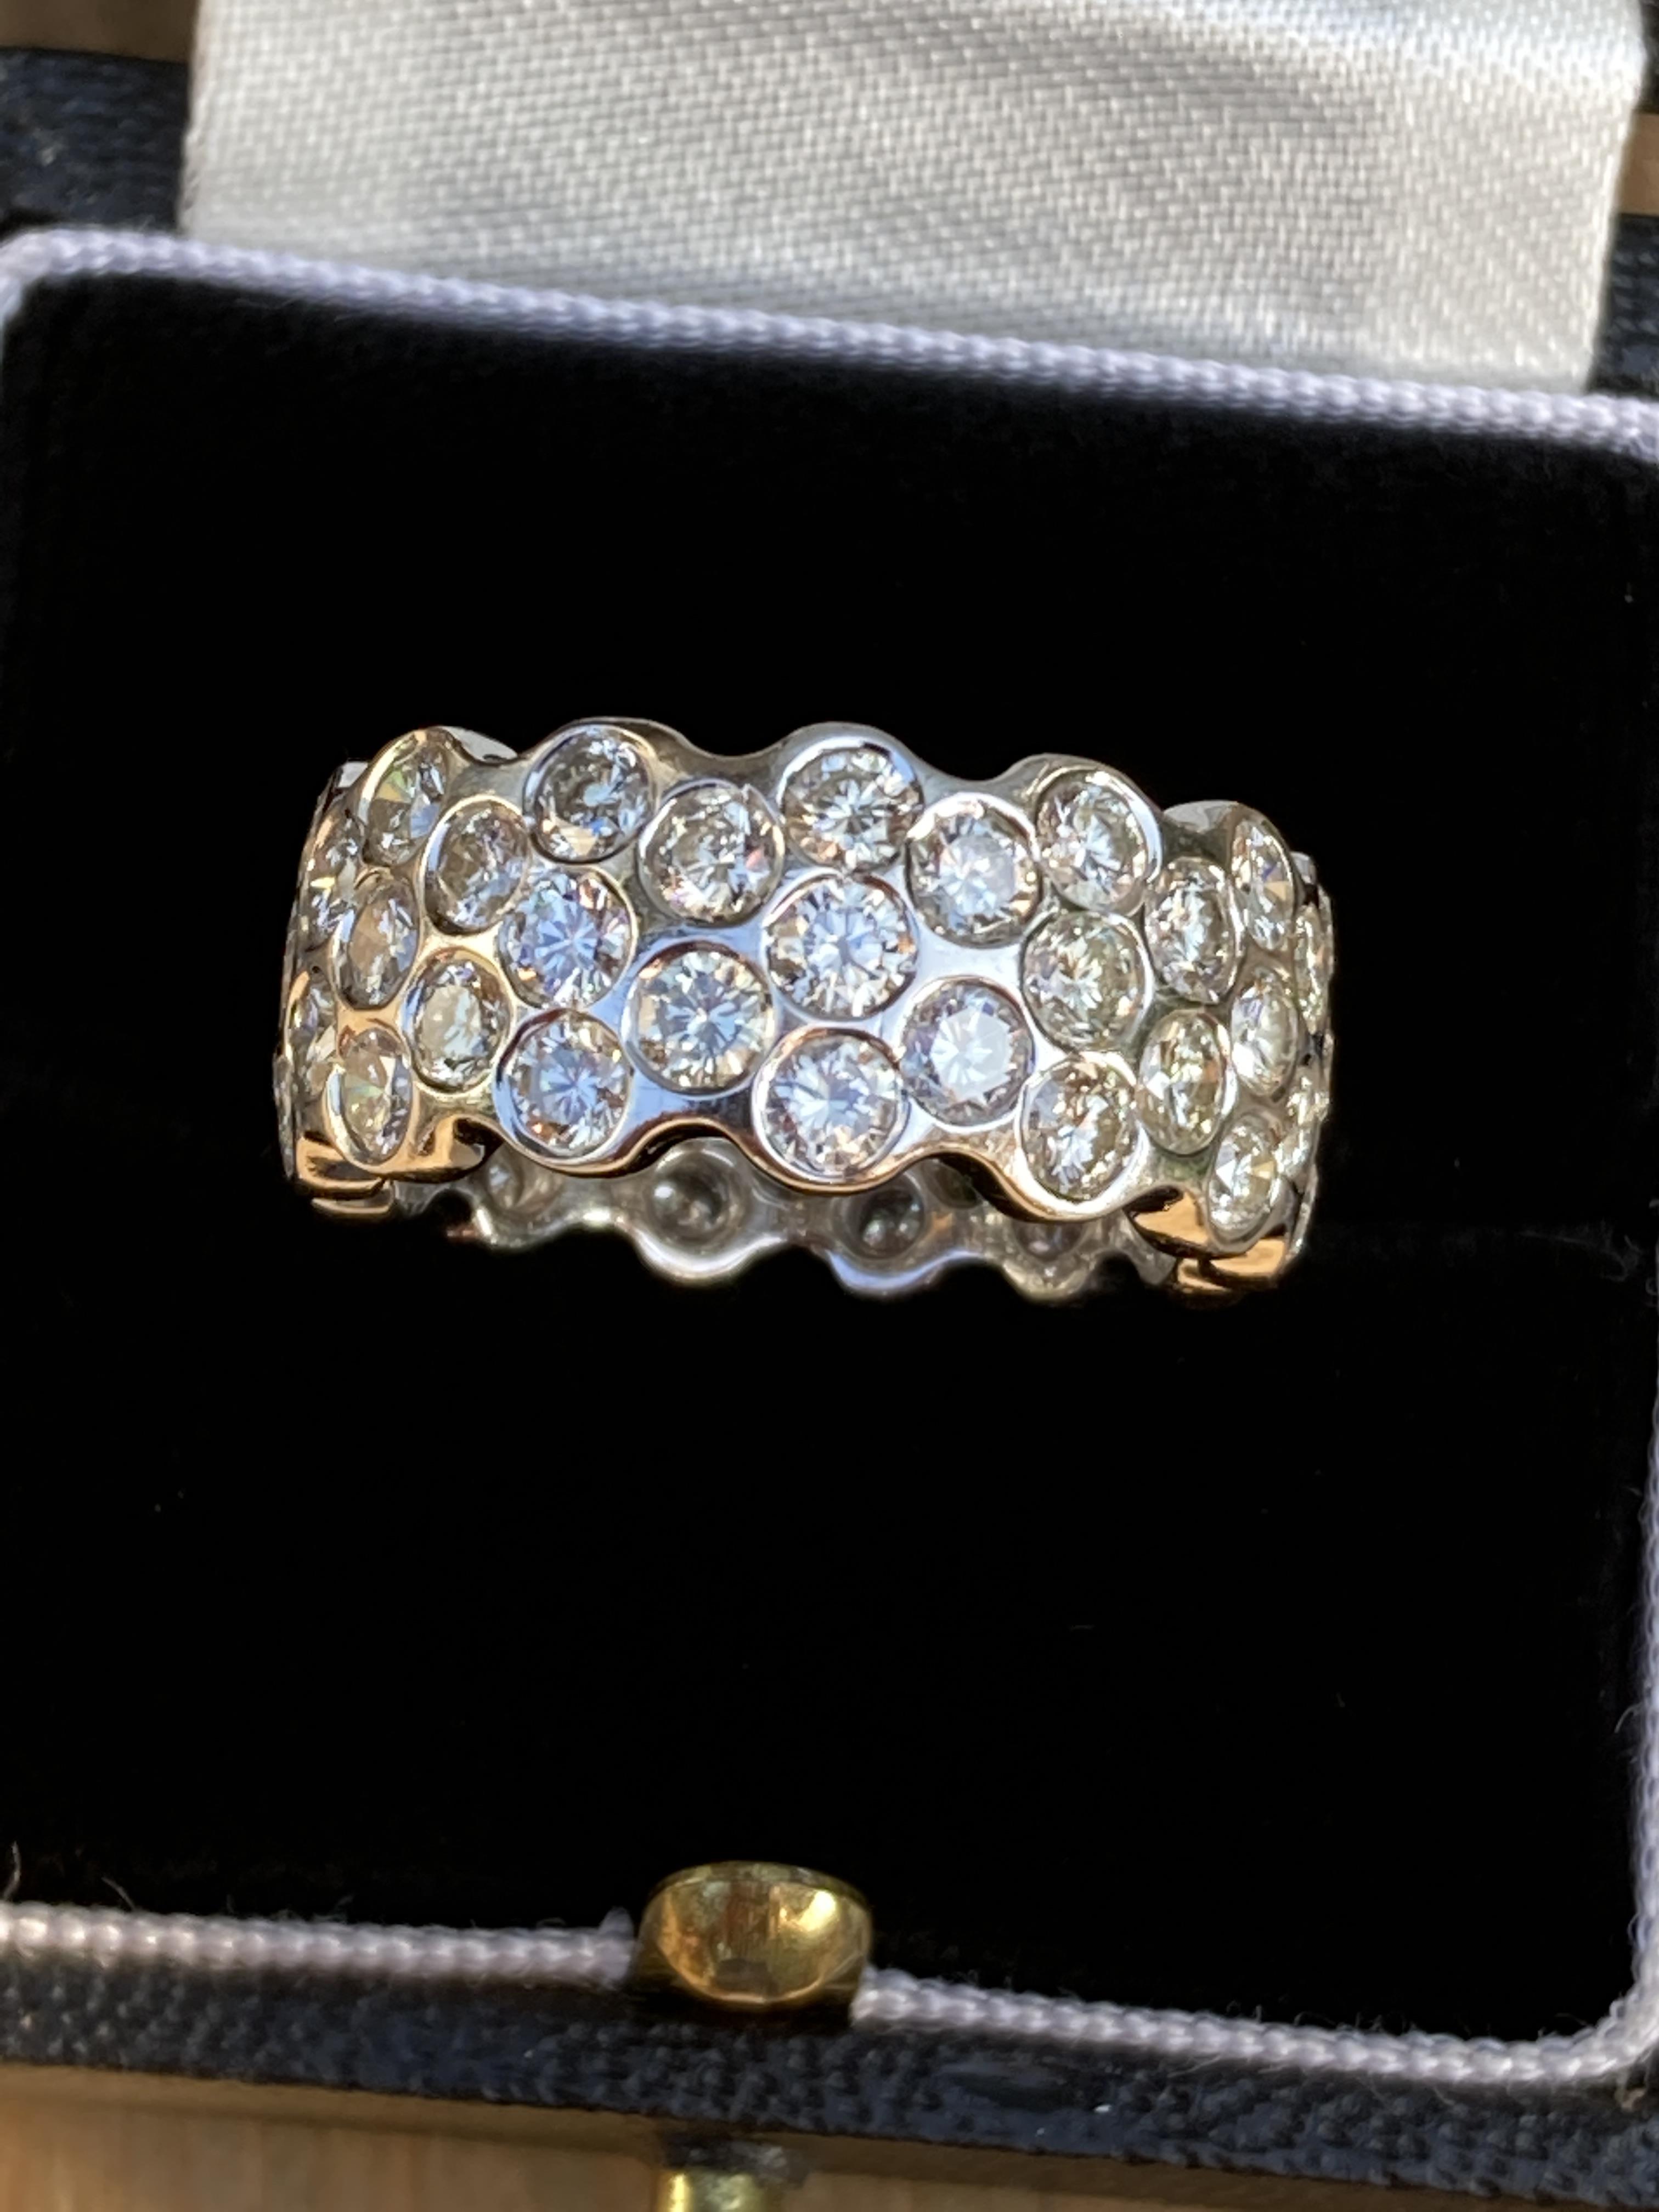 4.5CT DIAMOND RING, WHITE GOLD (TESTED), ROUND BRILLIANT CUT DIAMONDS - Image 6 of 6